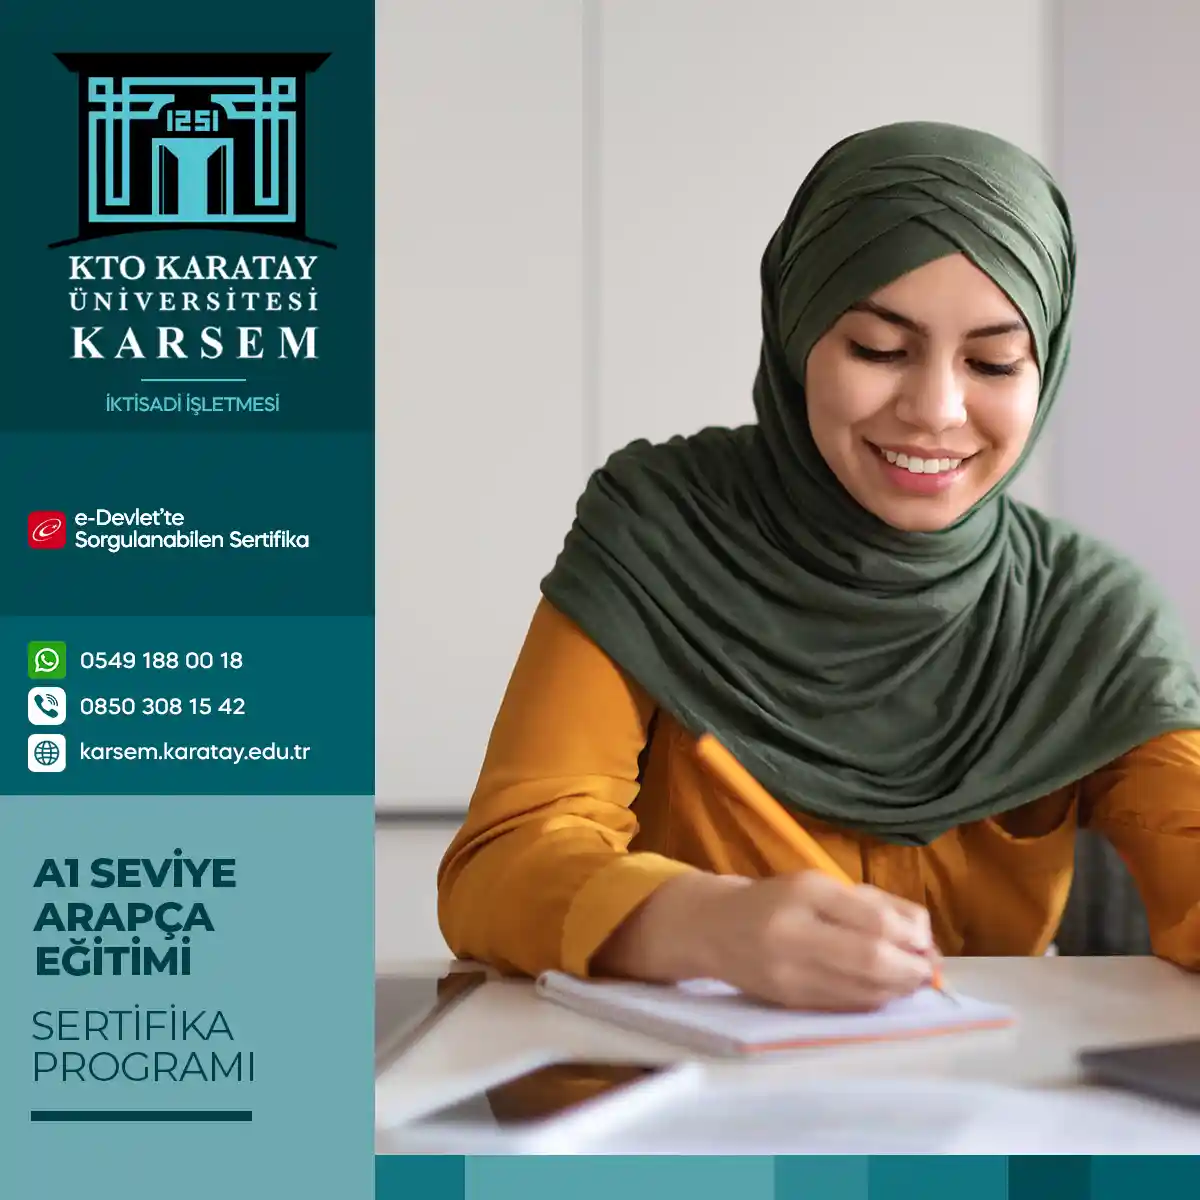 A1 Seviye Arapça Eğitimi Sertifika Programı